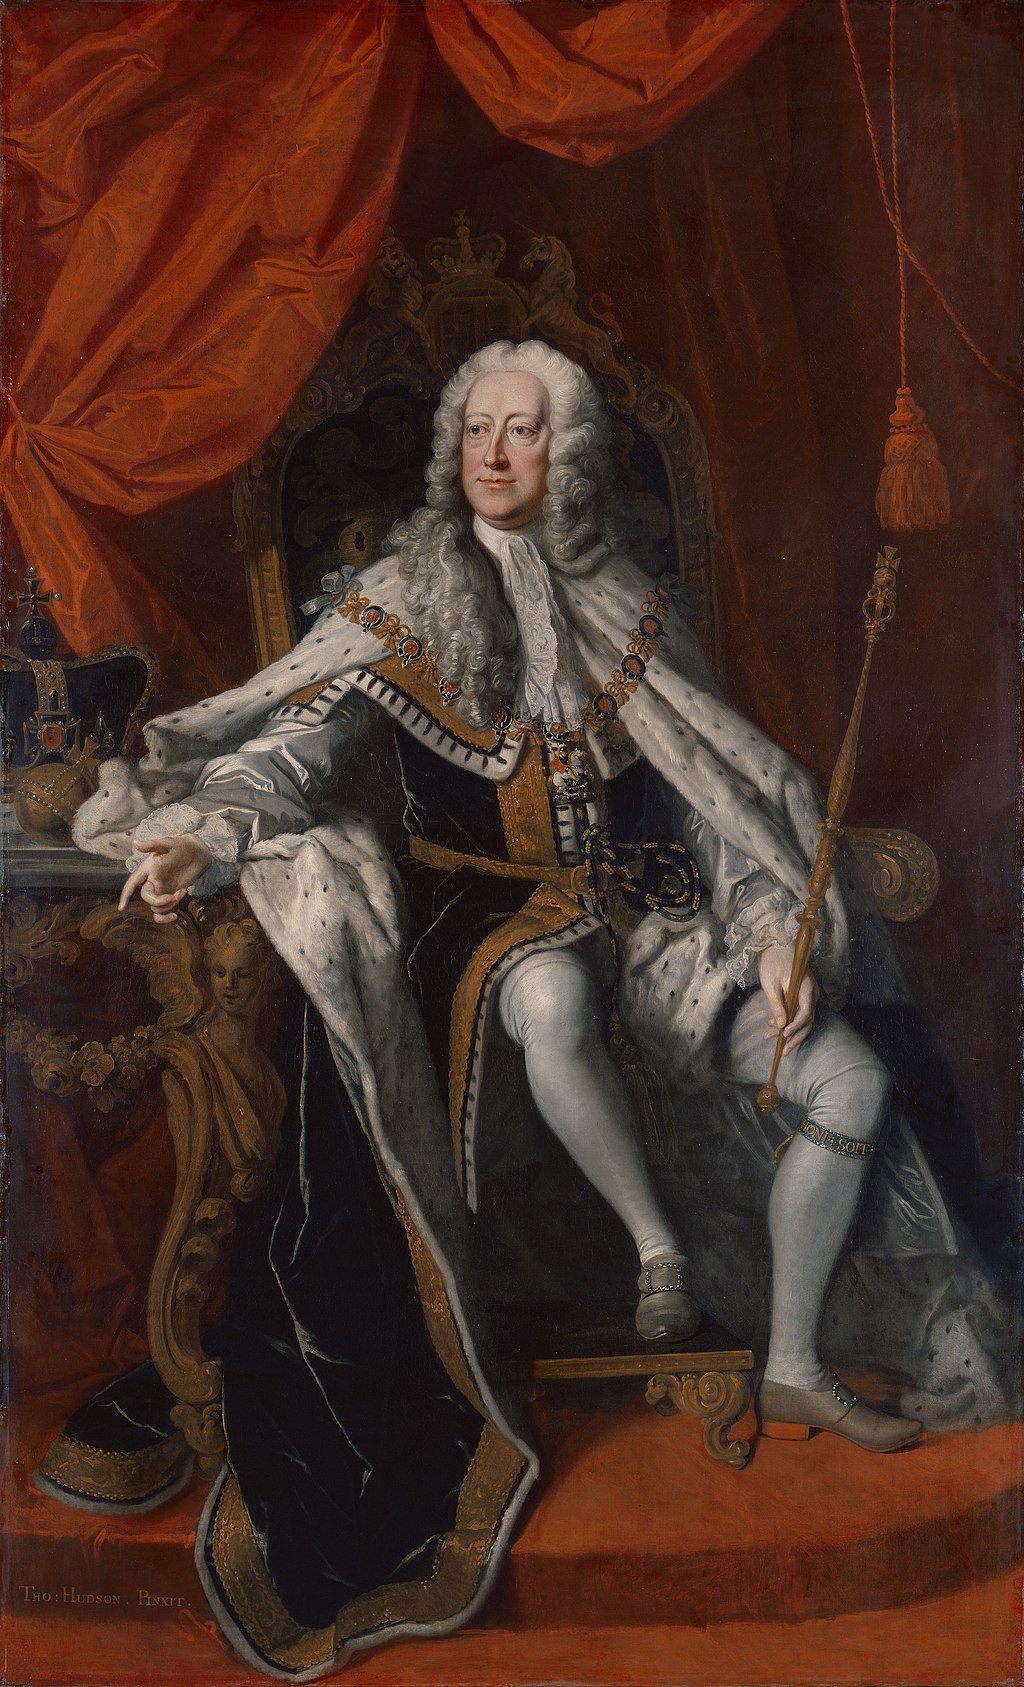 British Monarchs: King George II painting by Thomas Hudson, 1744. Photo Credit: © Public Domain via Wikimedia Commons.